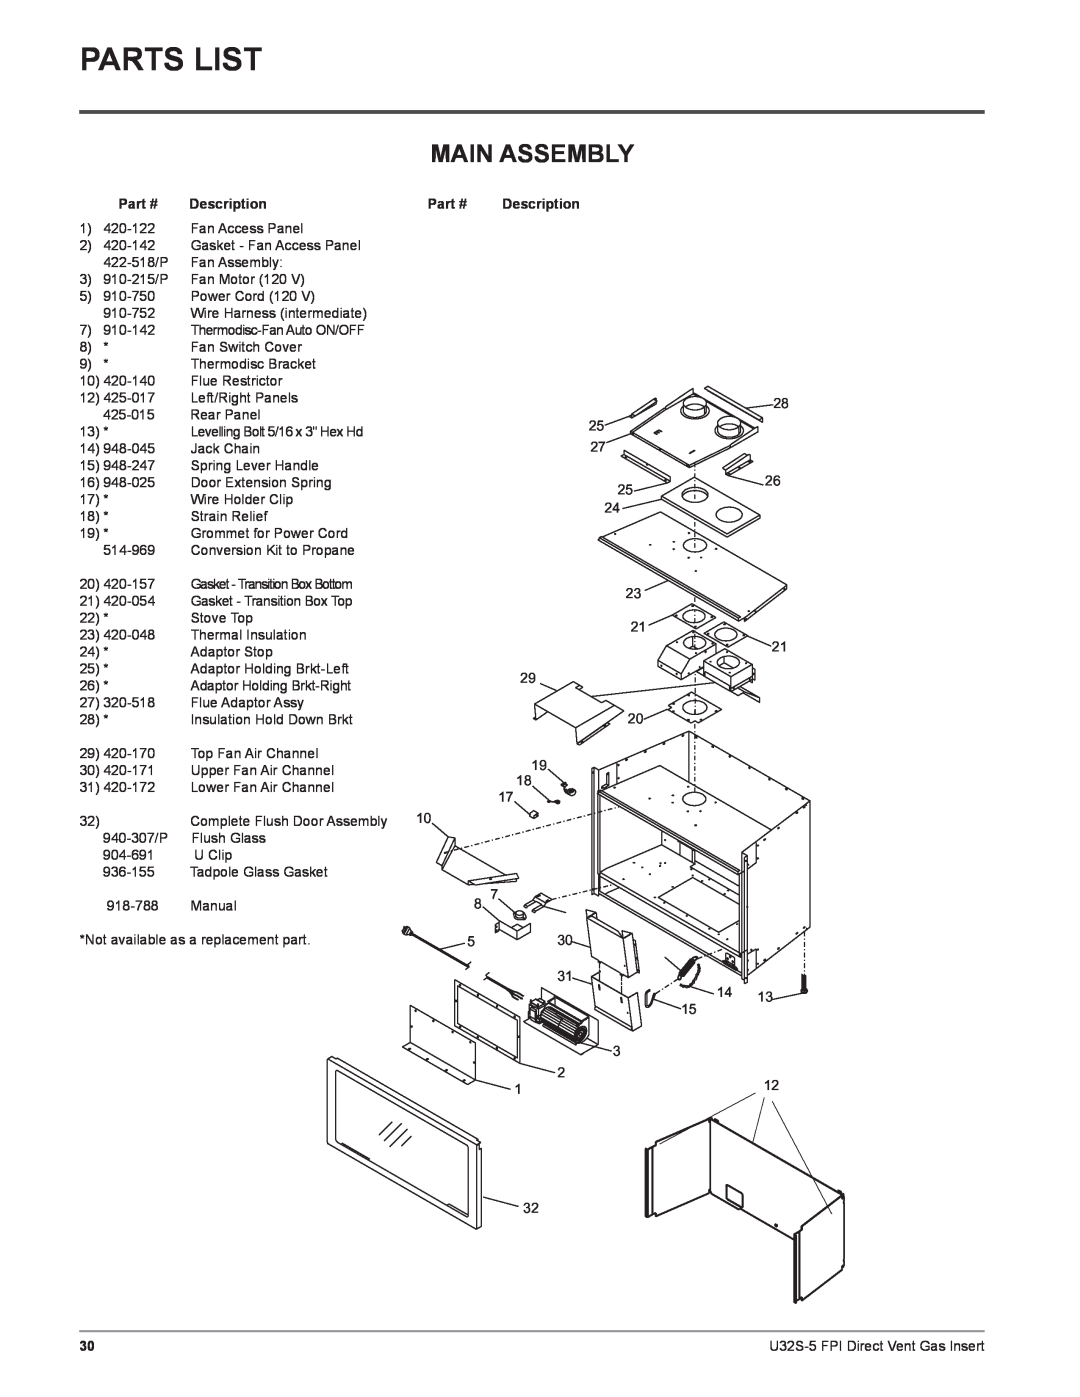 Regency U32S-NG5, U32S-LP5 installation manual Parts List, Main Assembly, Description 